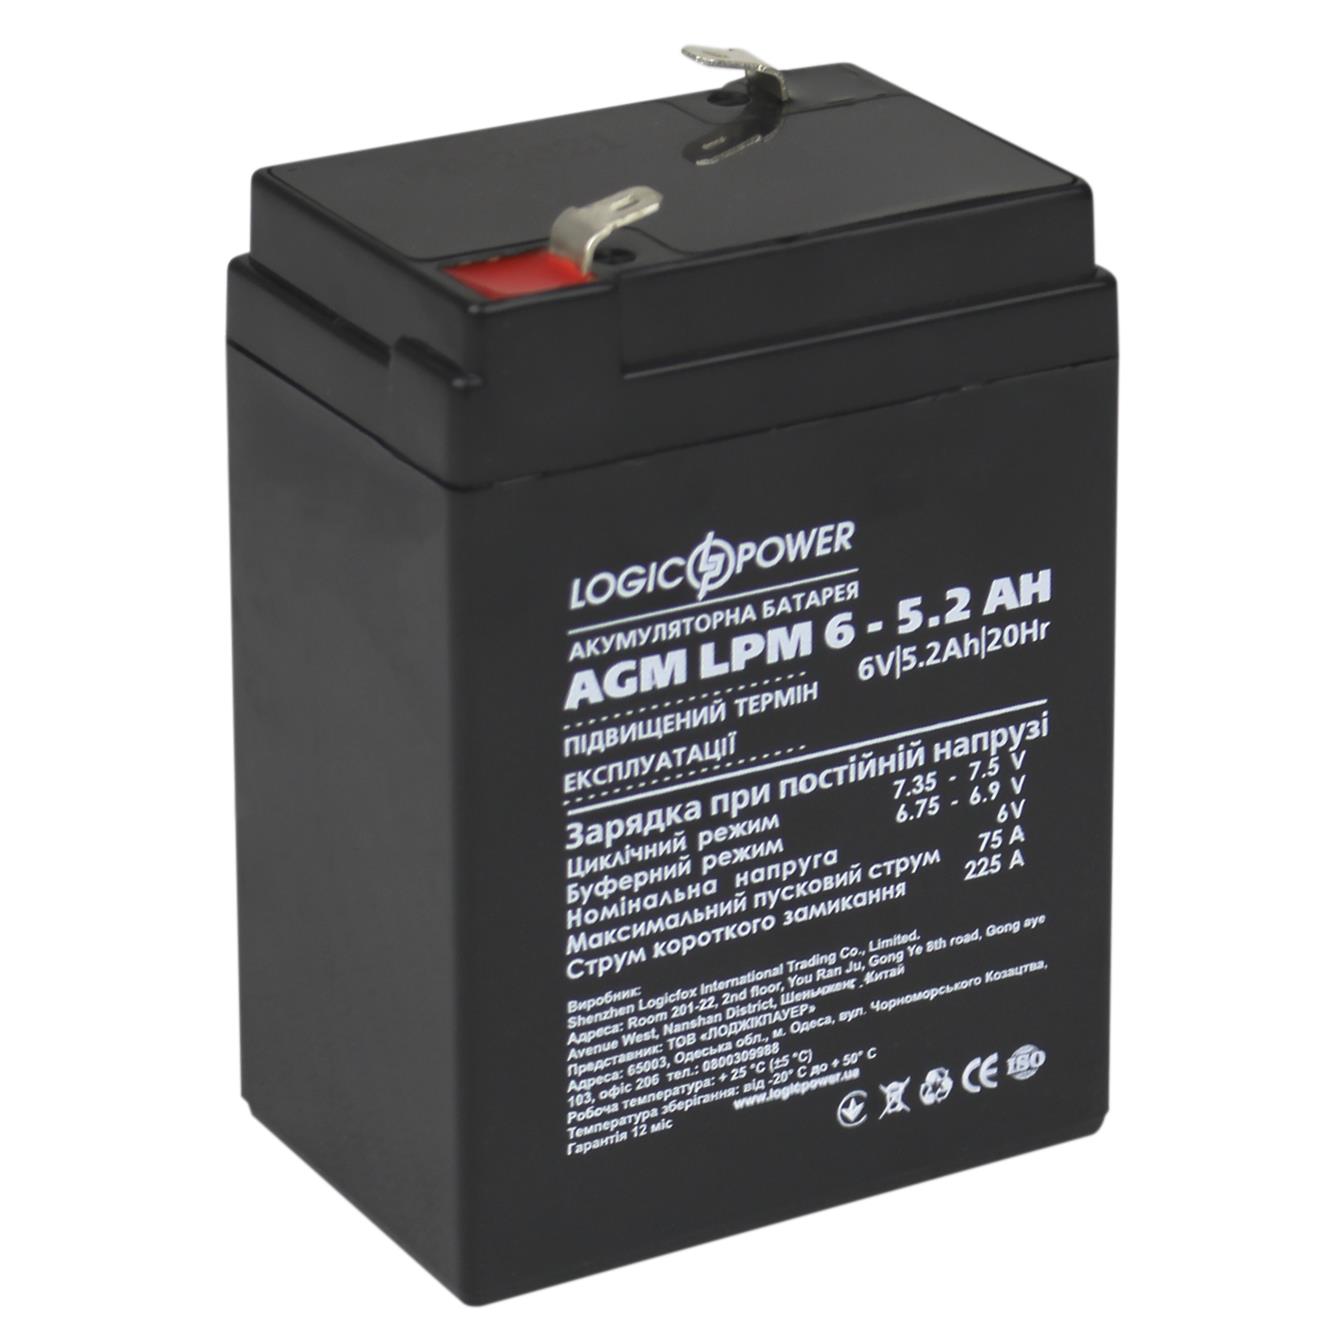 Аккумулятор свинцово-кислотный LogicPower AGM LPM 6V - 5.2 Ah (4158) цена 290.00 грн - фотография 2